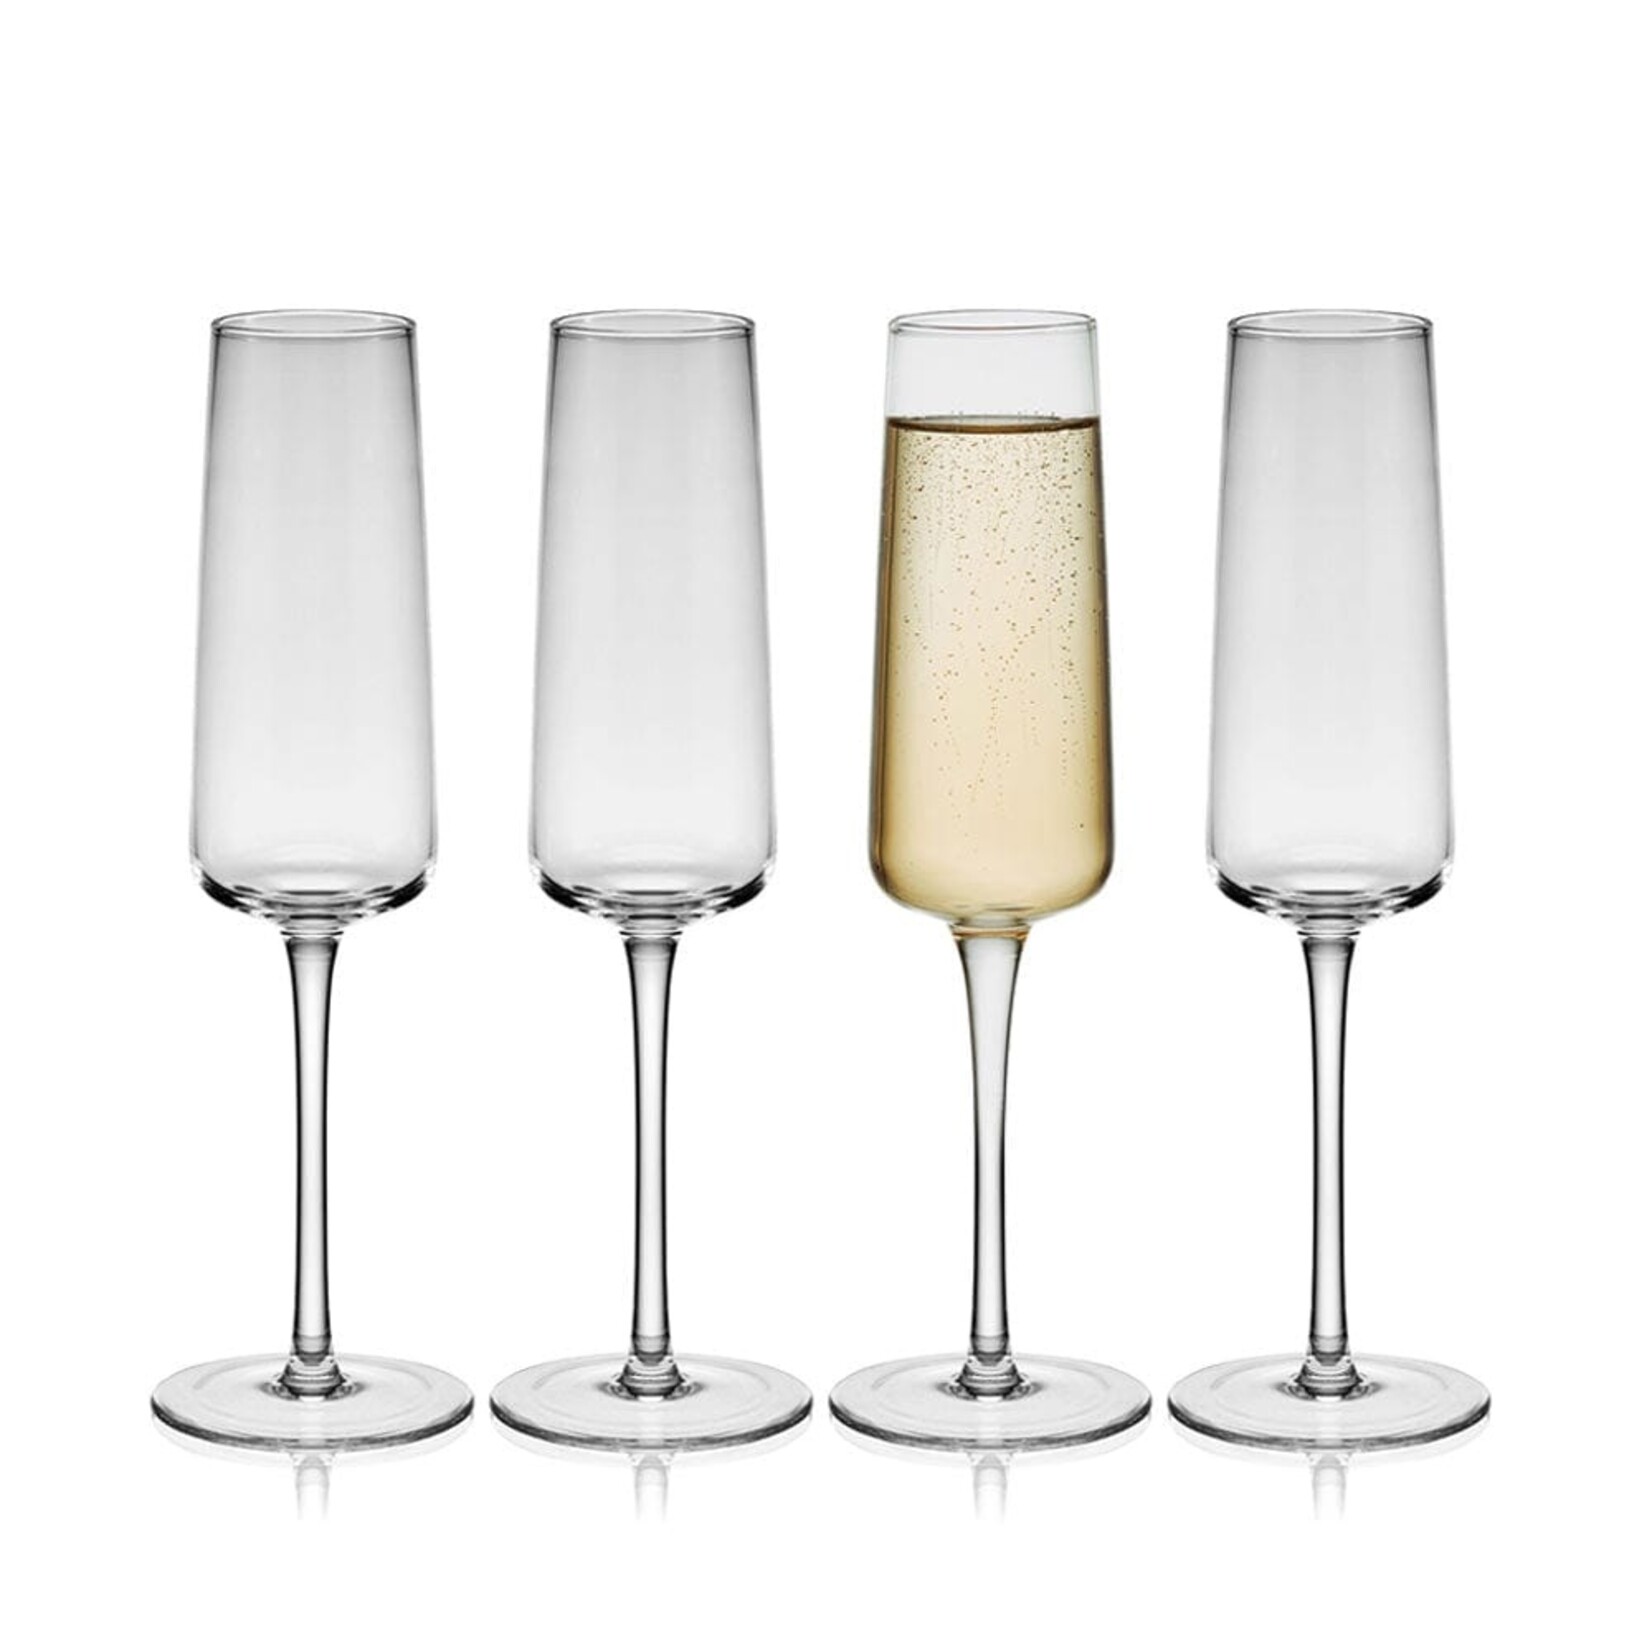 Cora Champagne Flute Glasses - Set of 4